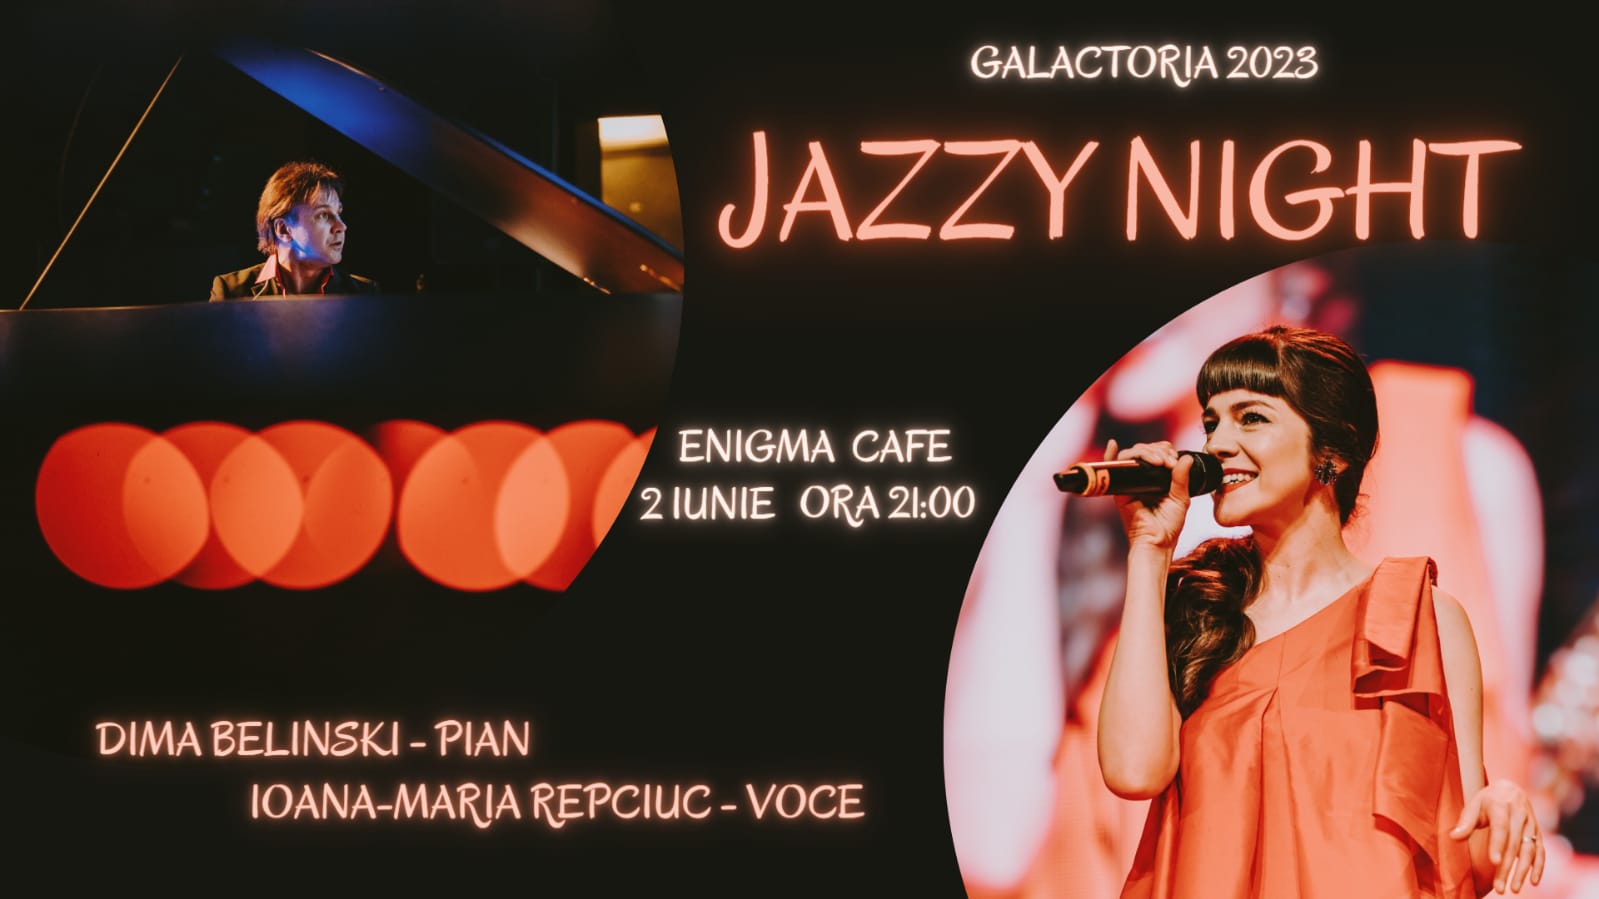 jazzy night galactoria 2023